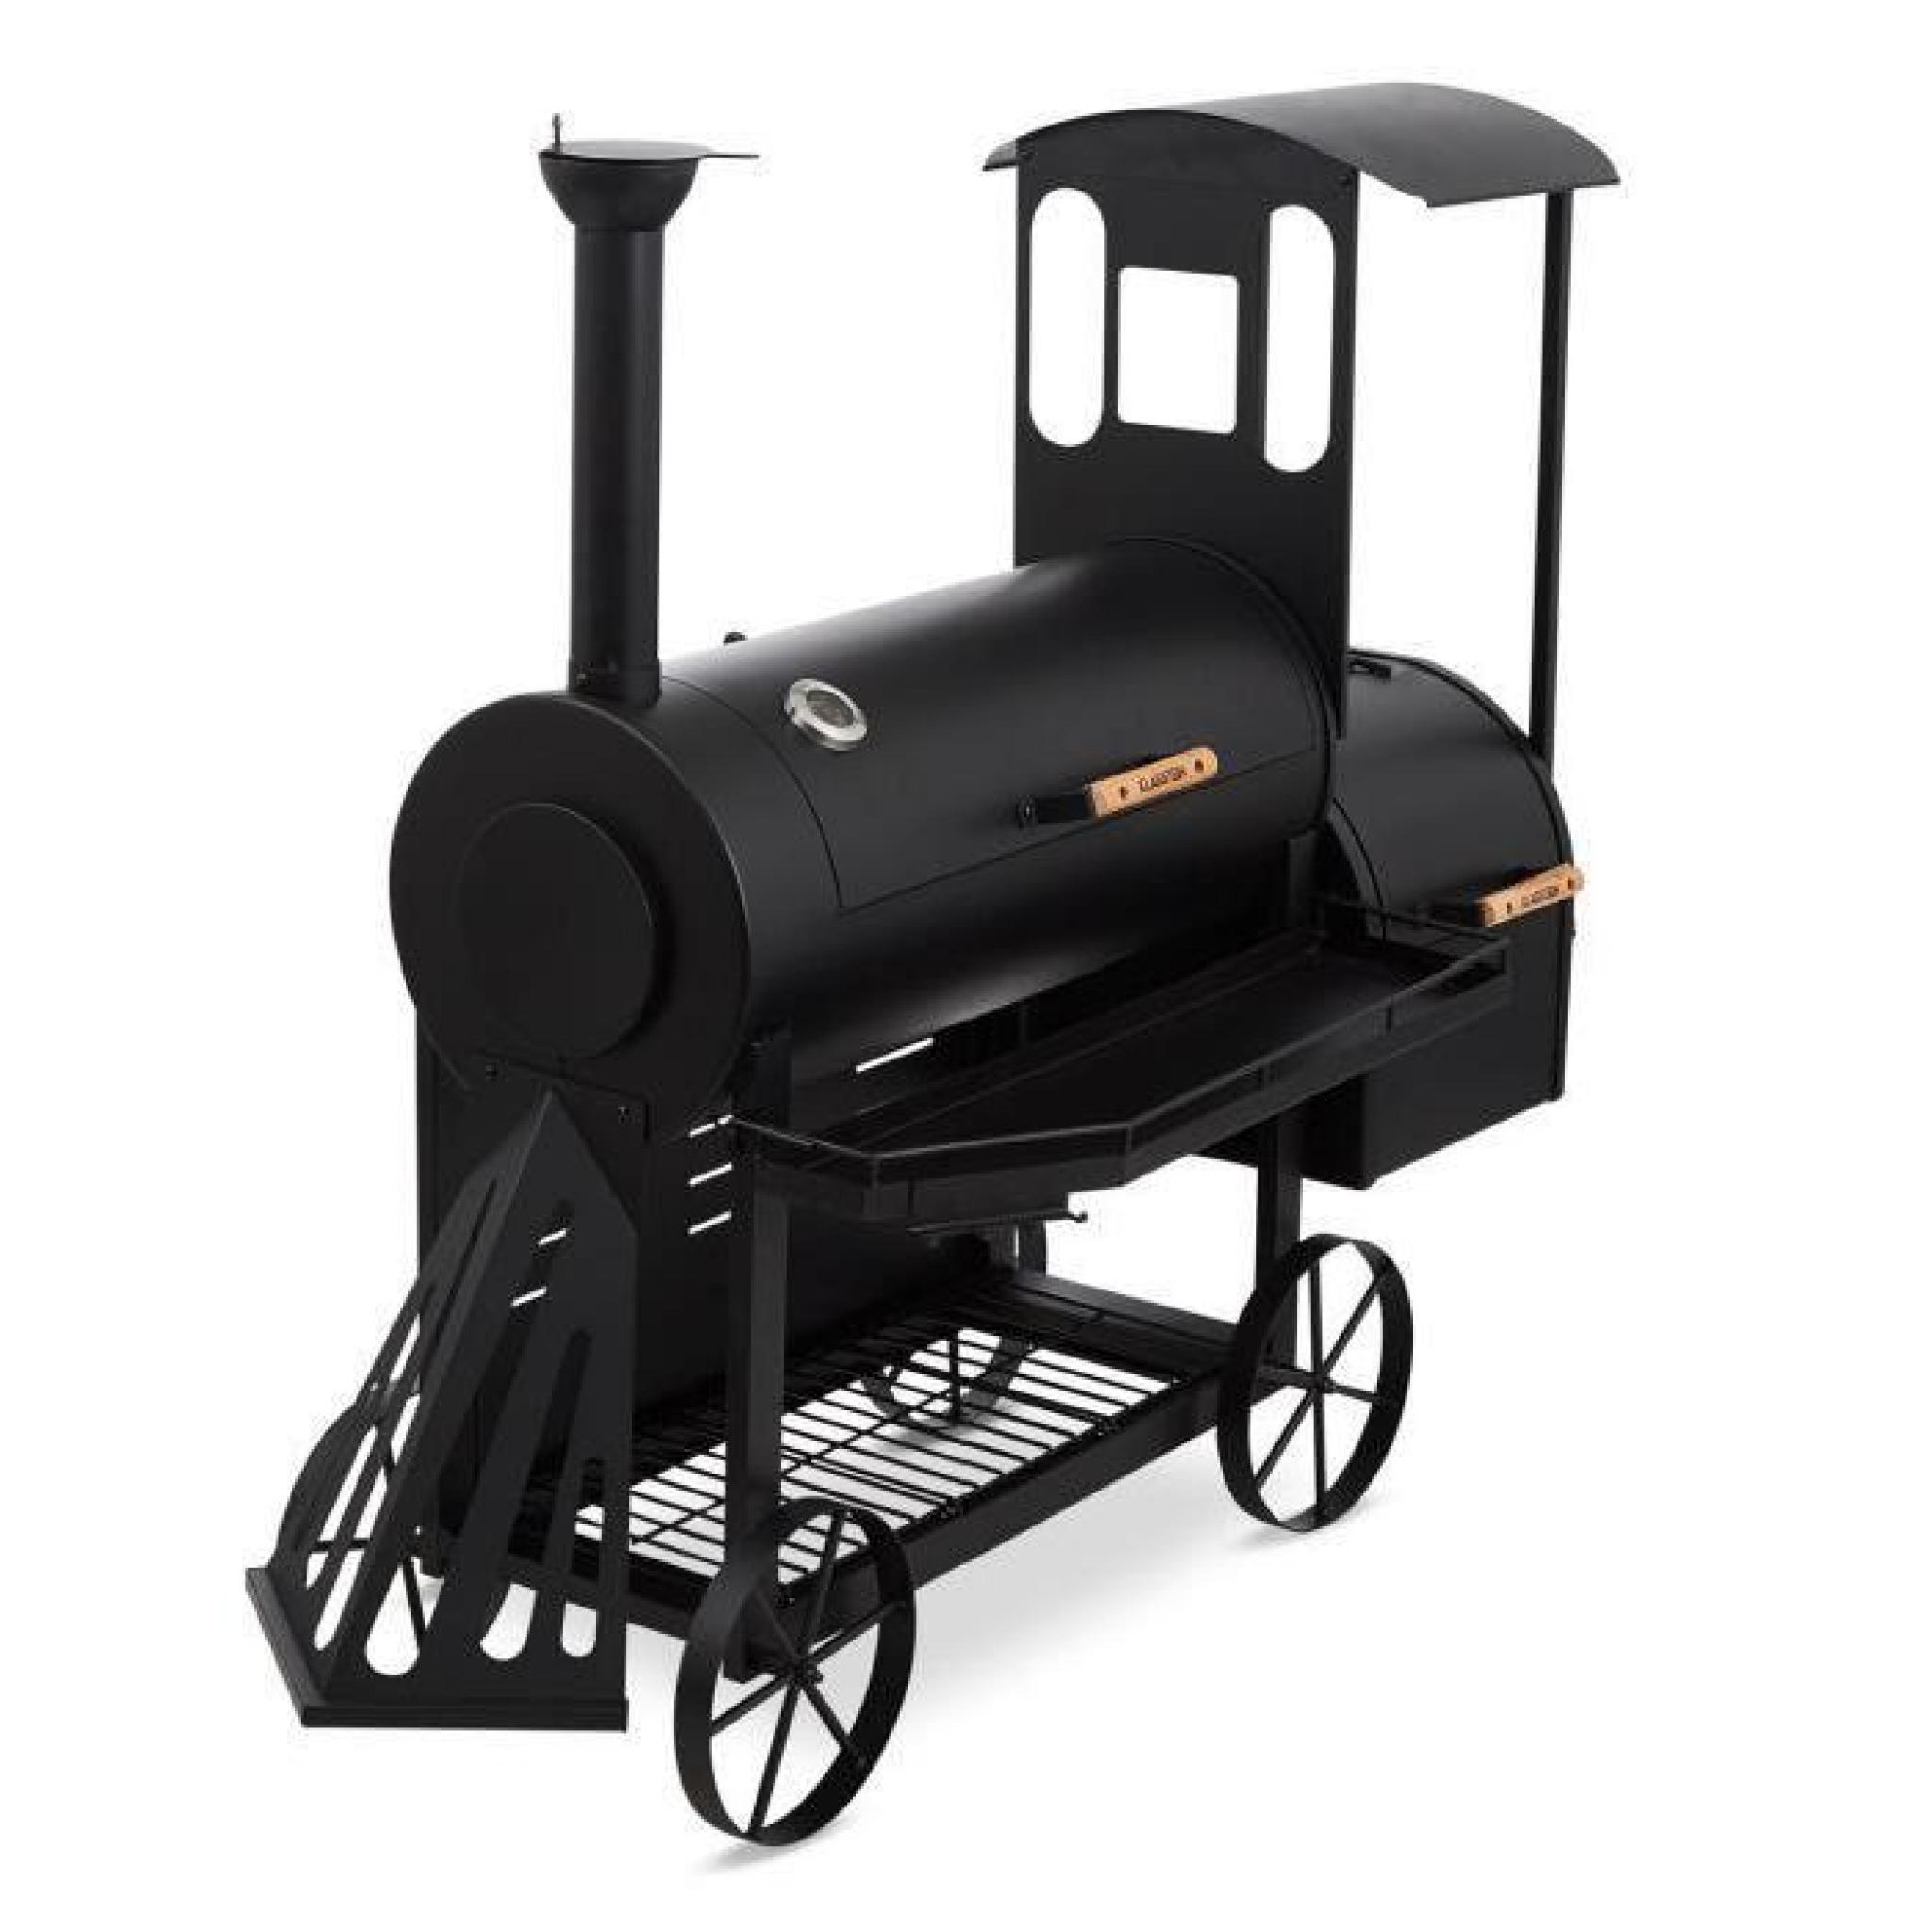 Klarstein Dampflok Smoker Grill à charbon fumoir sur roues style locomotive western - cuve acier 3mm